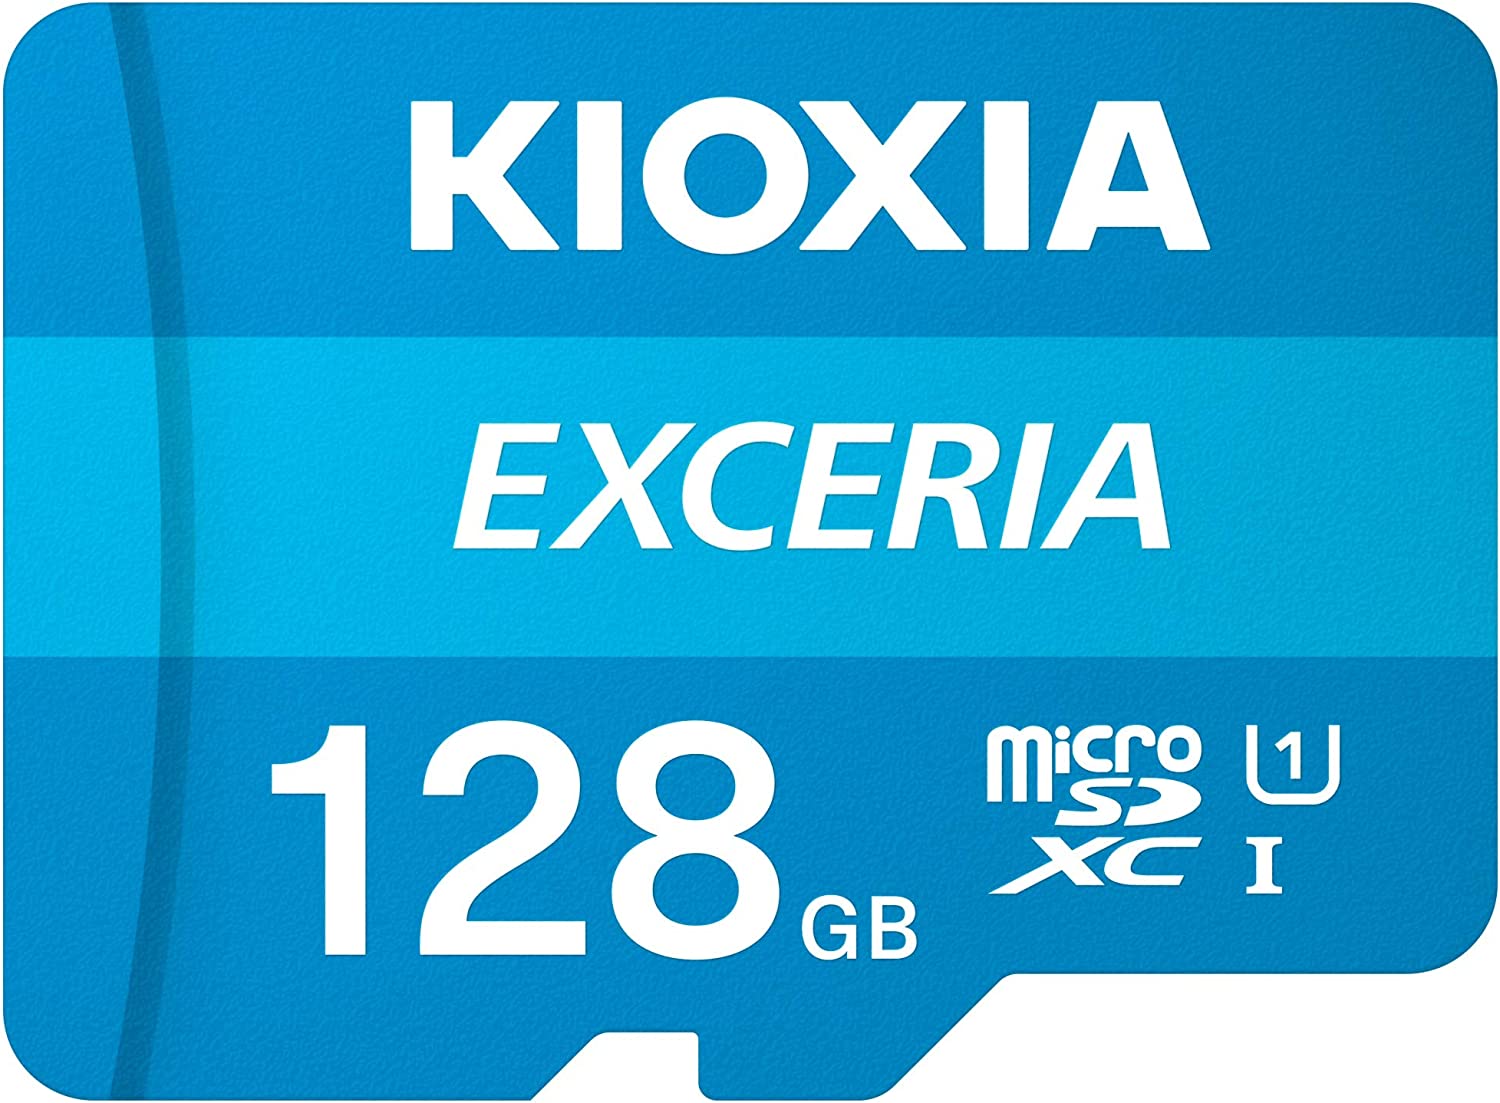 Kioxia Exceria 128GB